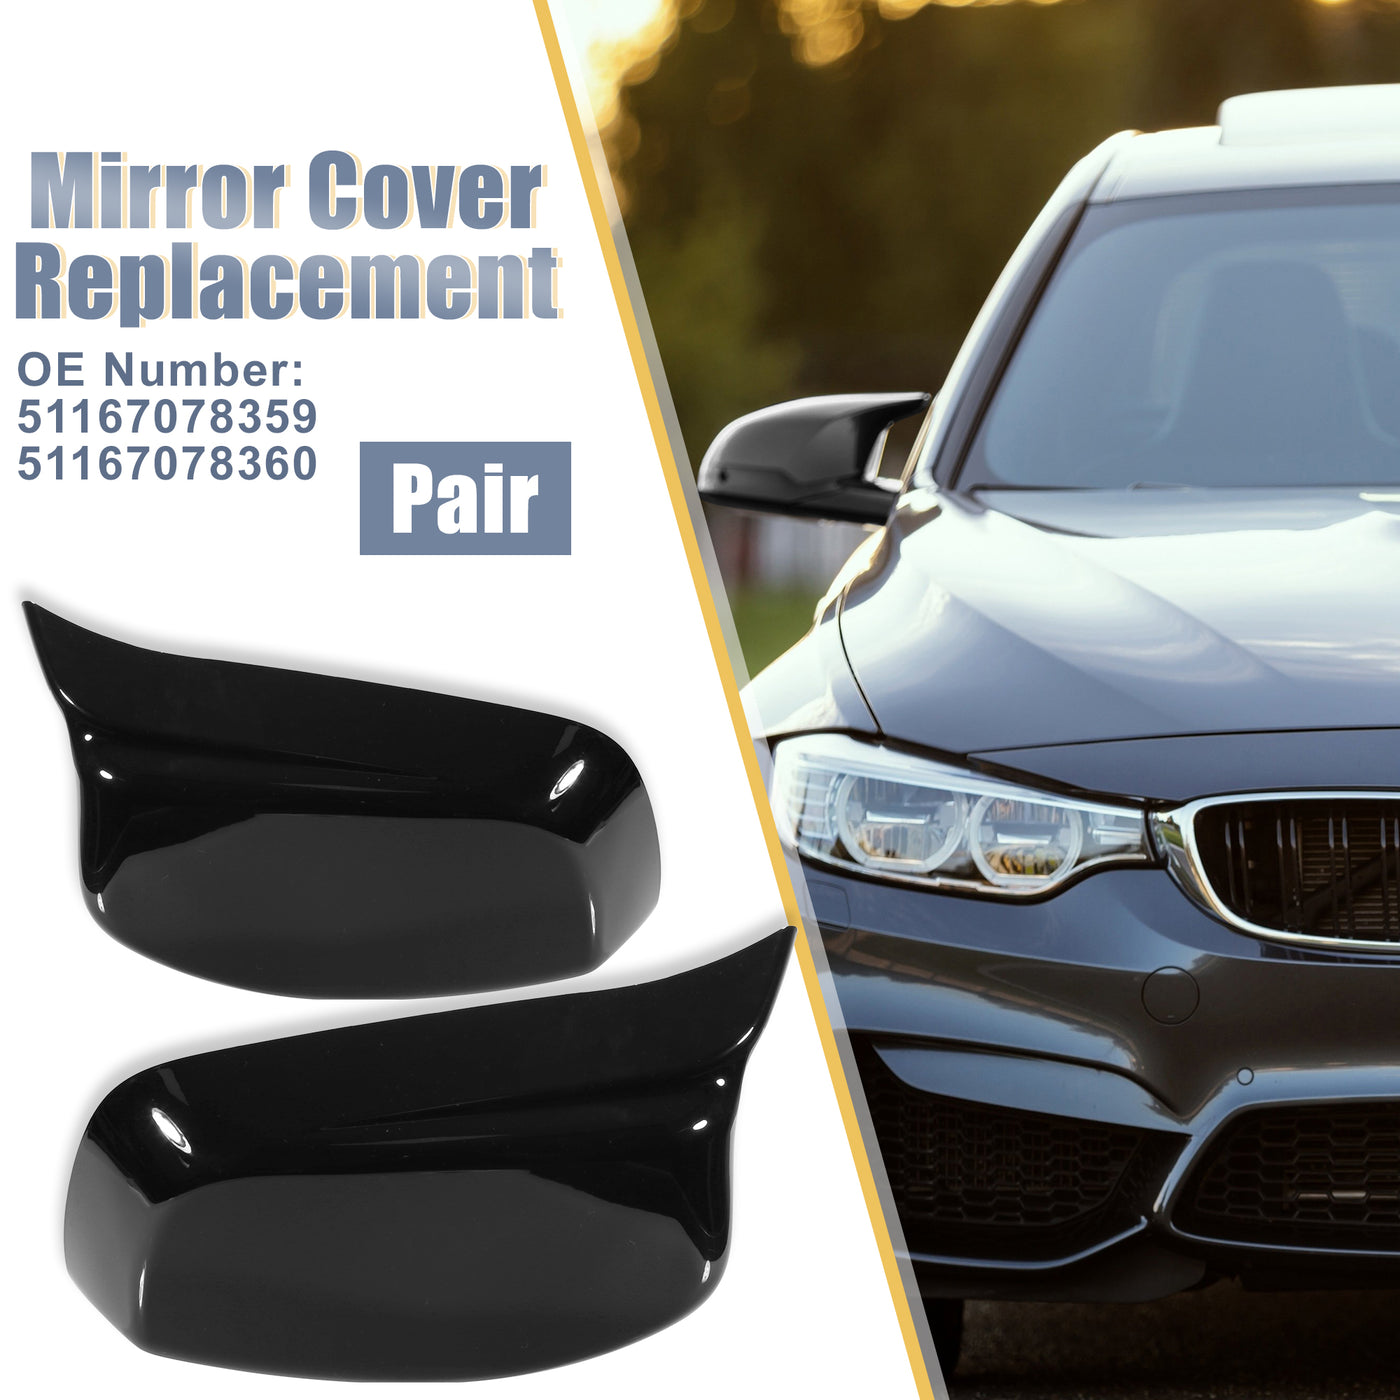 X AUTOHAUX Pair Car Exterior Rear View Mirror Covers Cap Replacement for BMW 5 Series E60 E61 E63 E64 2004-2007 Gloss Black